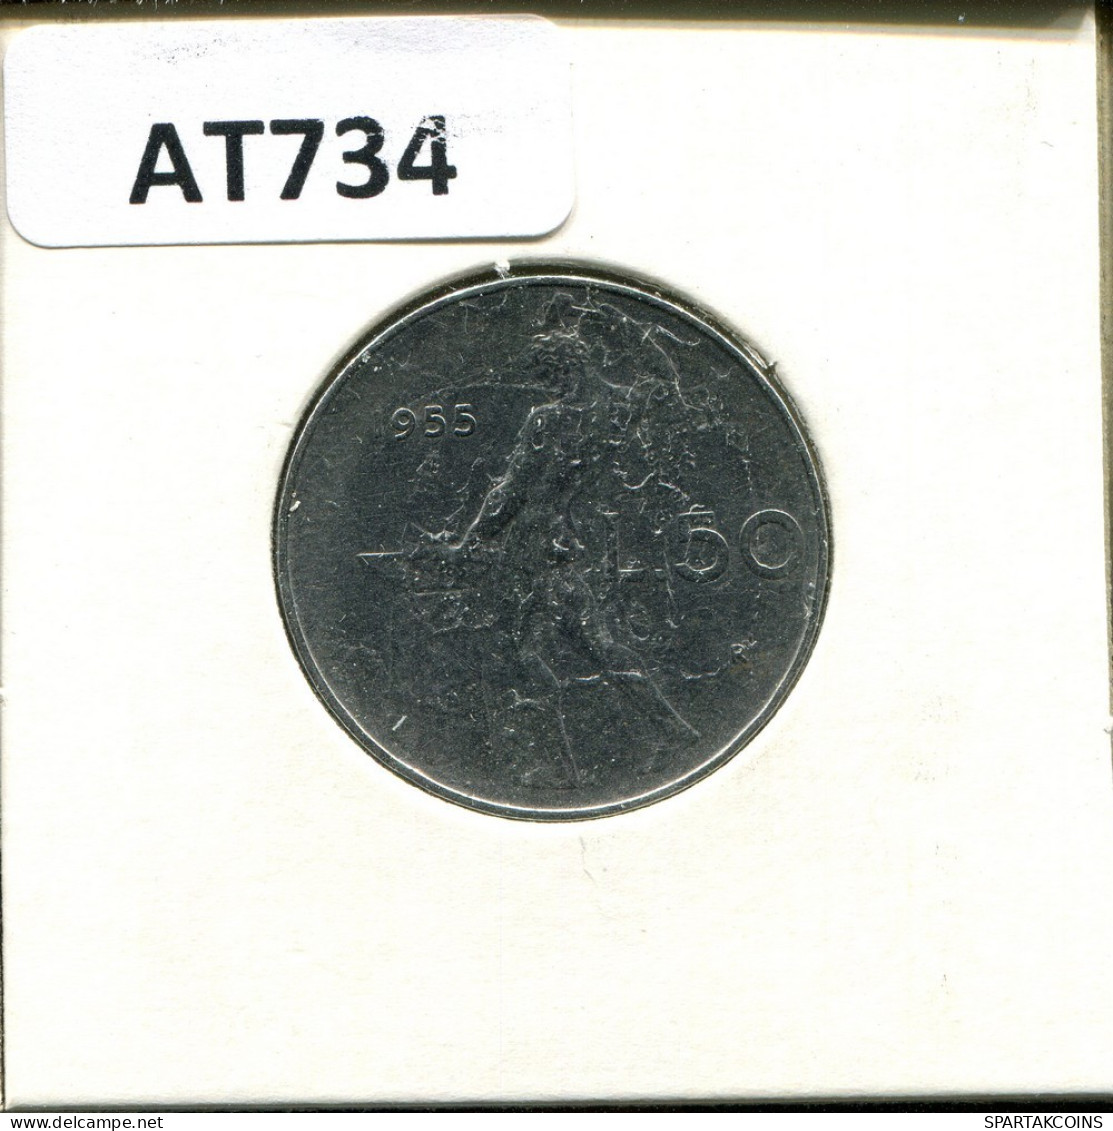 50 LIRE 1955 ITALY Coin #AT734.U.A - 50 Liras